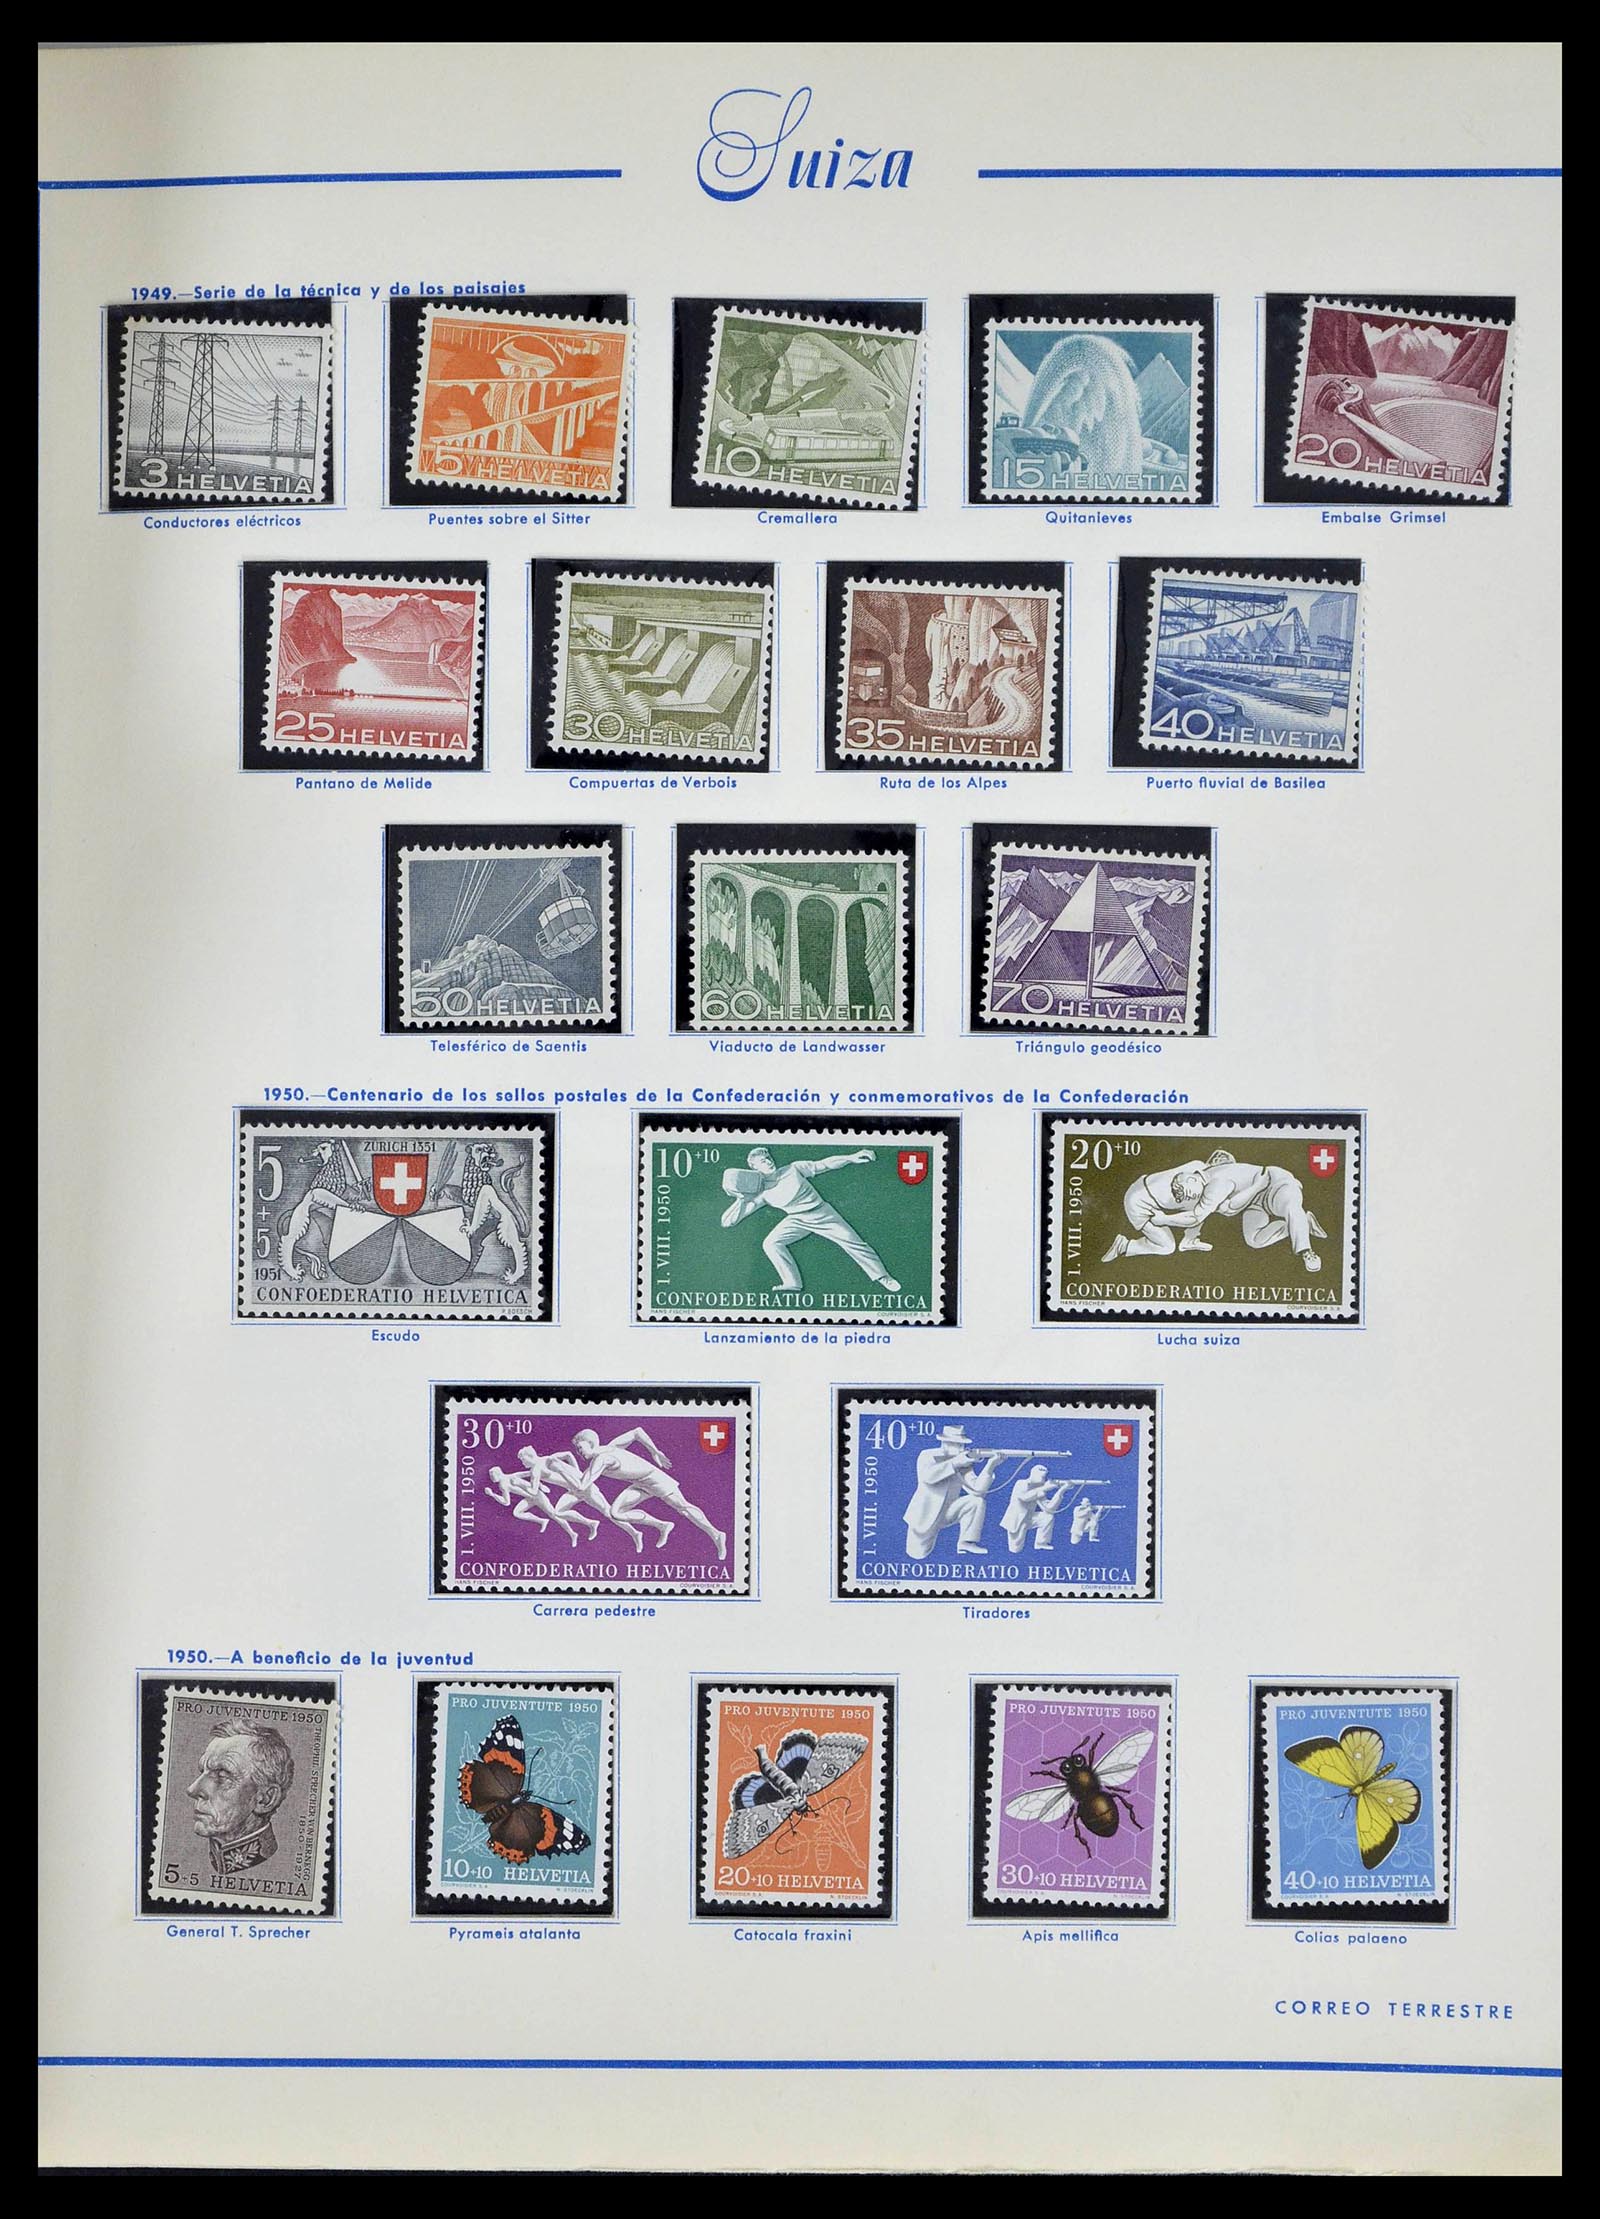 39217 0030 - Stamp collection 39217 Switzerland 1850-1986.